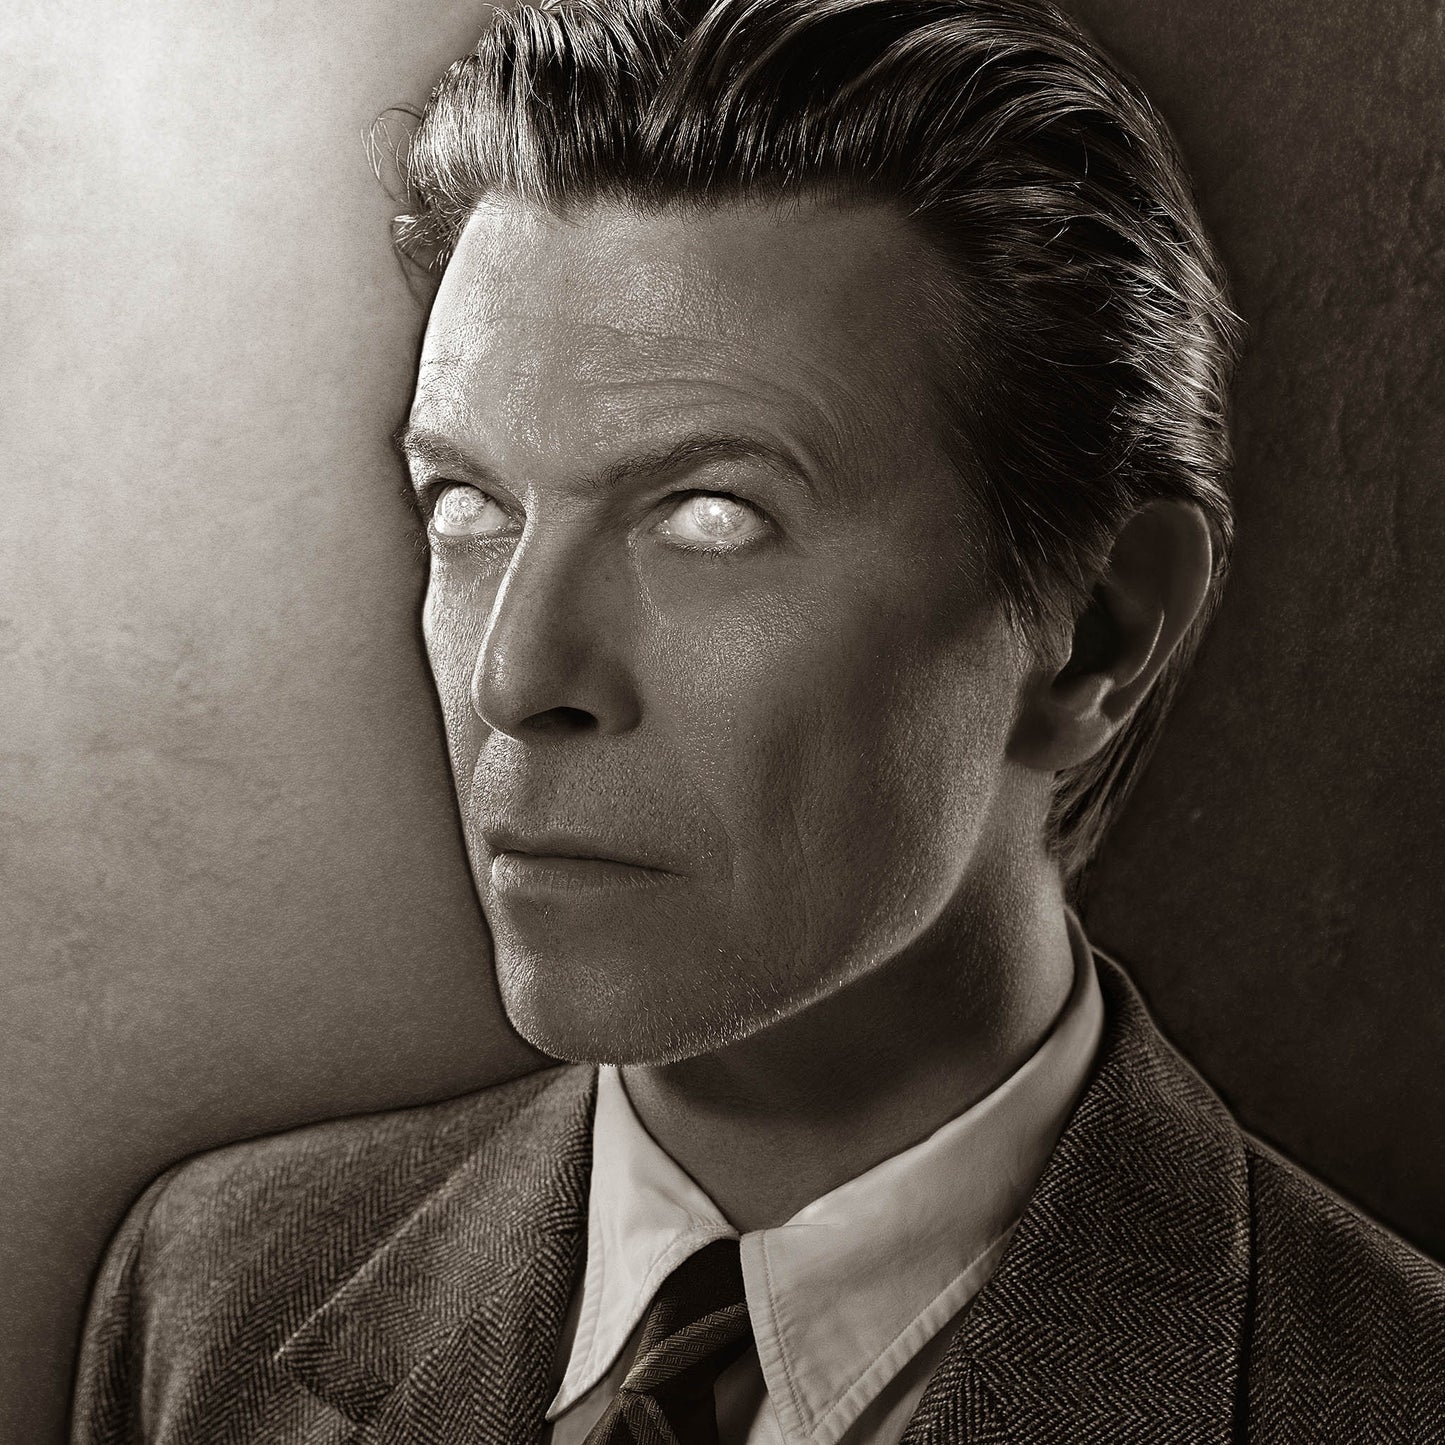 David Bowie, Heathen 2001 by Markus Klinko